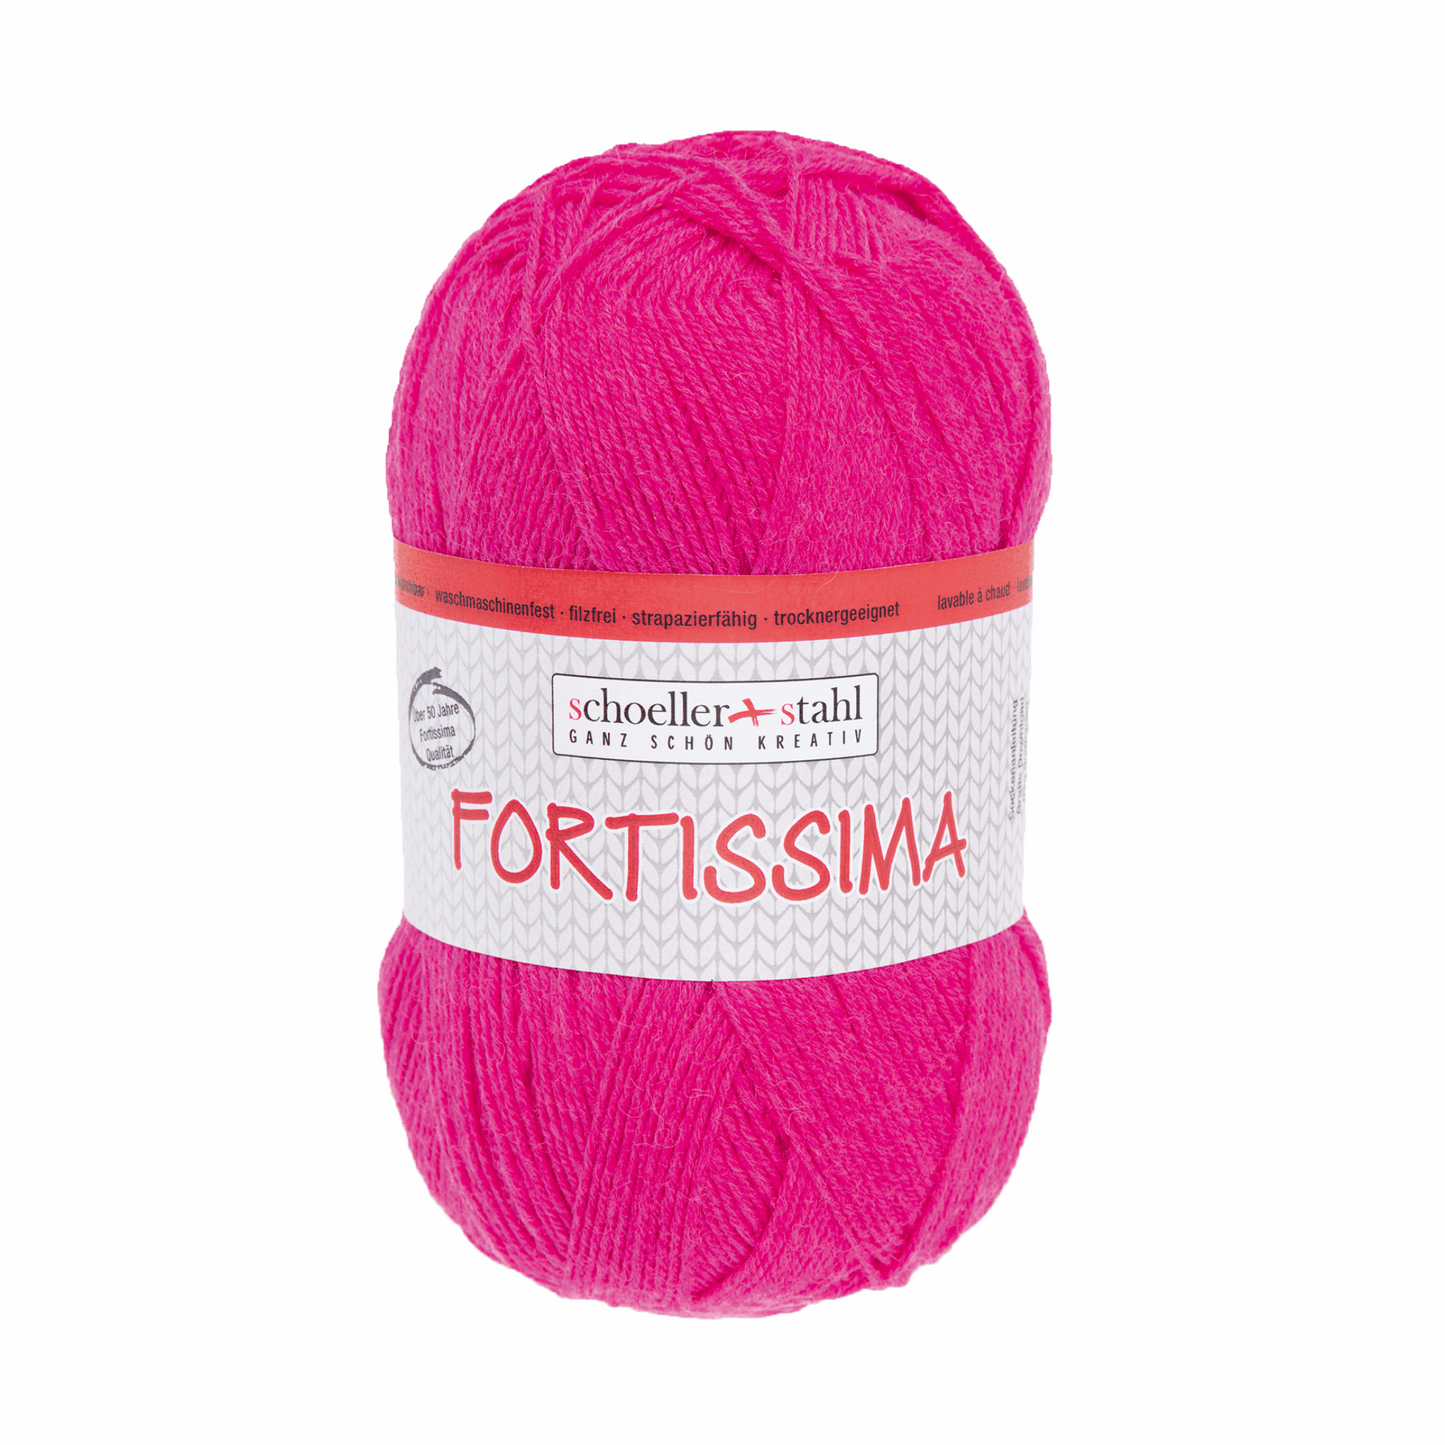 Fortissima socka 100, 90038, color 2012, fuchsia